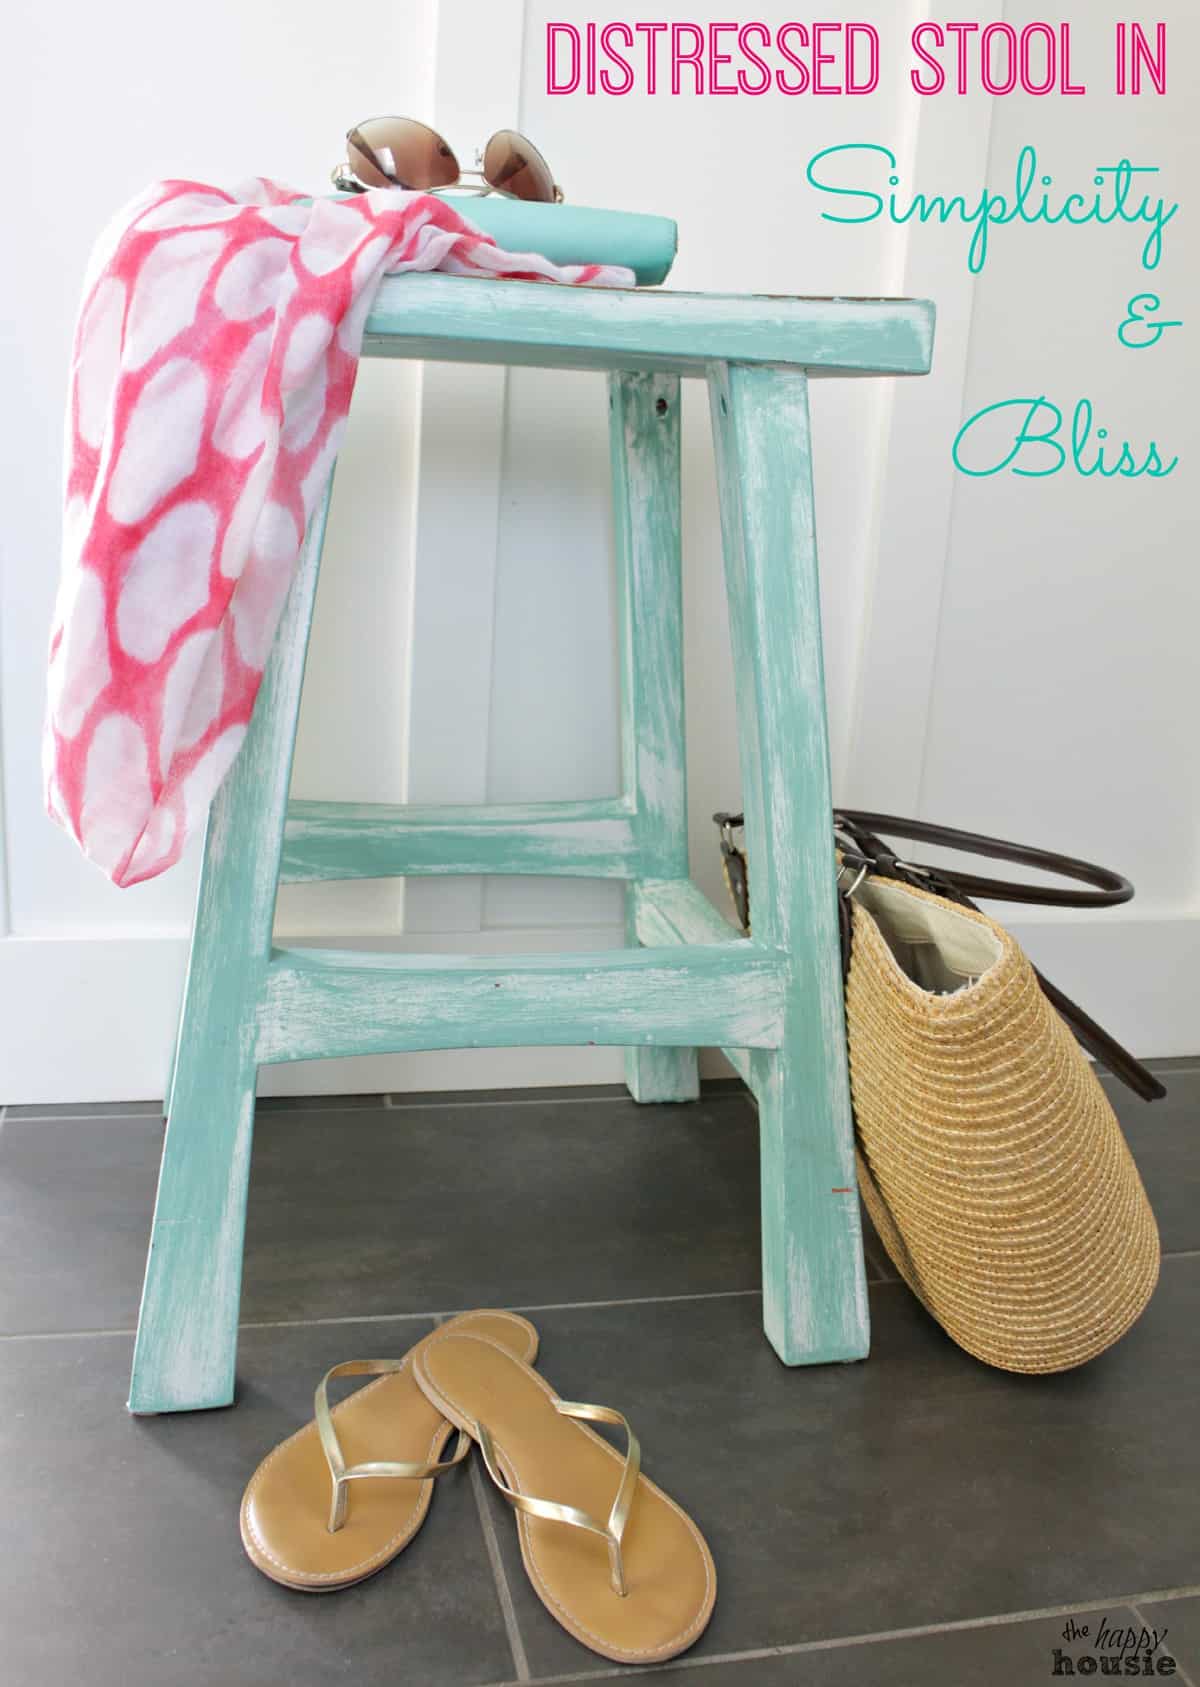 Beautiful turquoise distressed stool #DIY #paintedfurniture #layeredcolors - www.countrychicpaint.com/blog